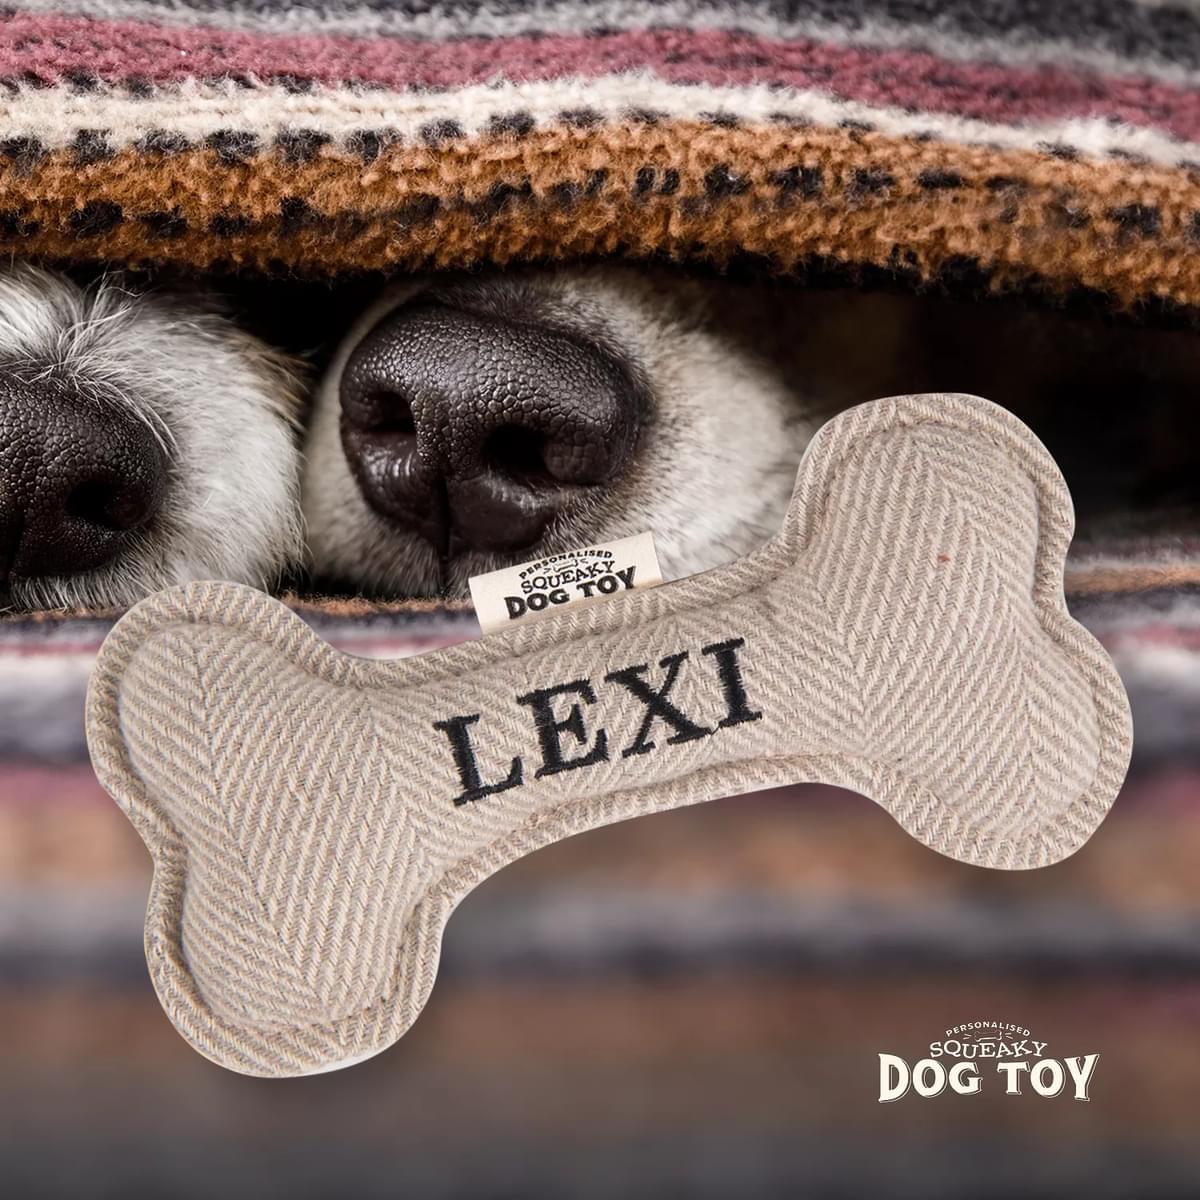 Named Squeaky Dog Toy- Lexi. Bone shaped herringbone tweed pattern dog toy. 